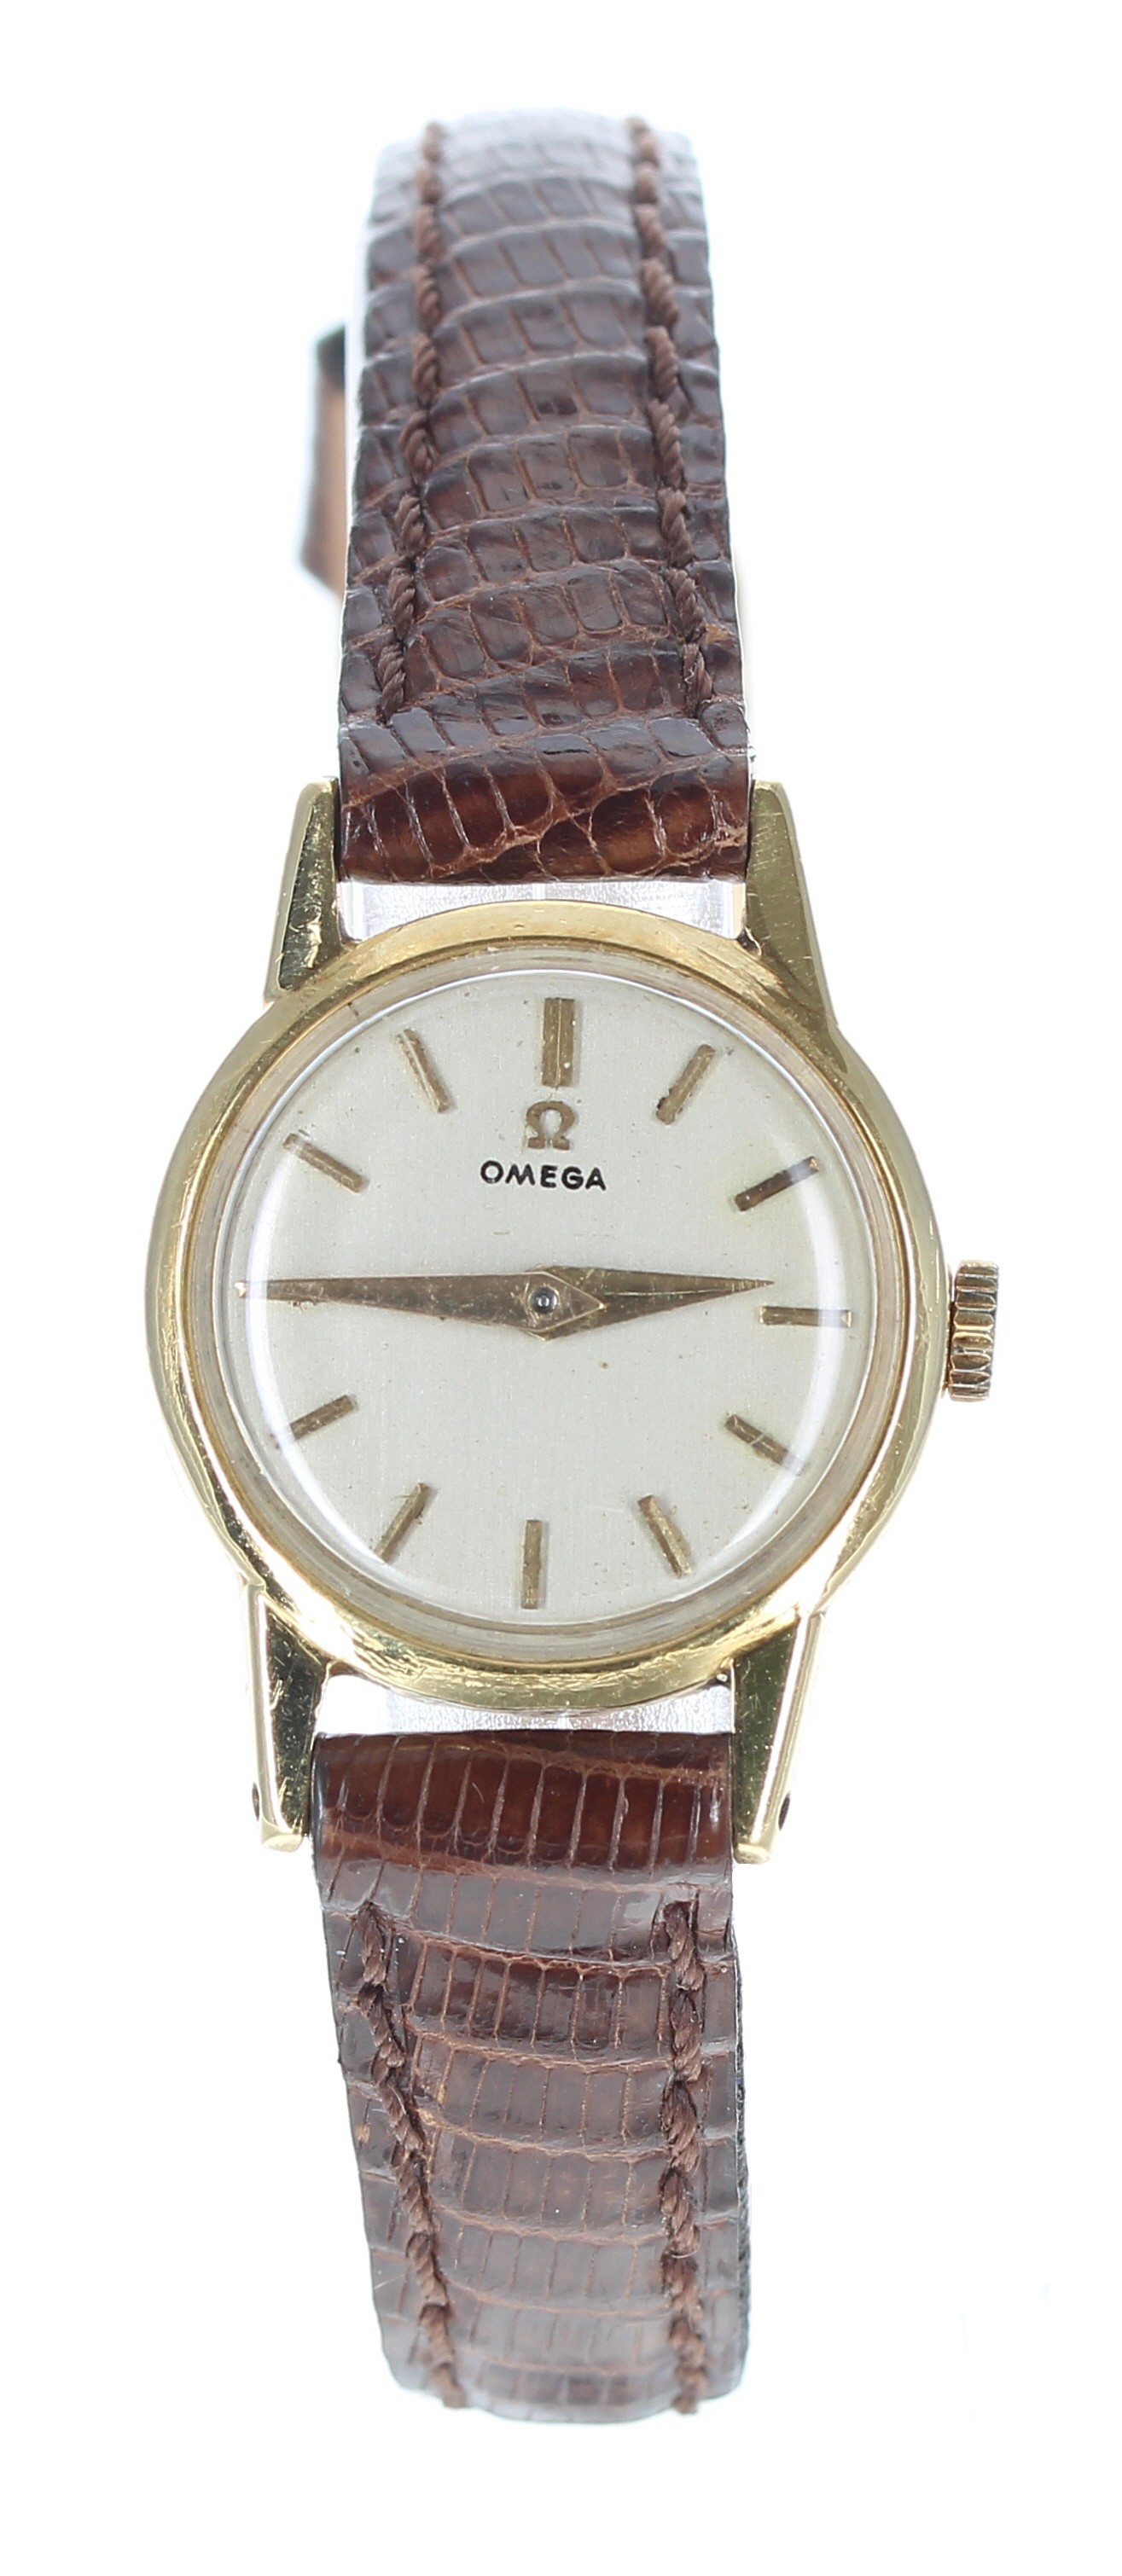 Omega 18ct lady's wristwatch, case no. 11447xxx 26xxD, serial no. 15021xxx, circa 1956, circular